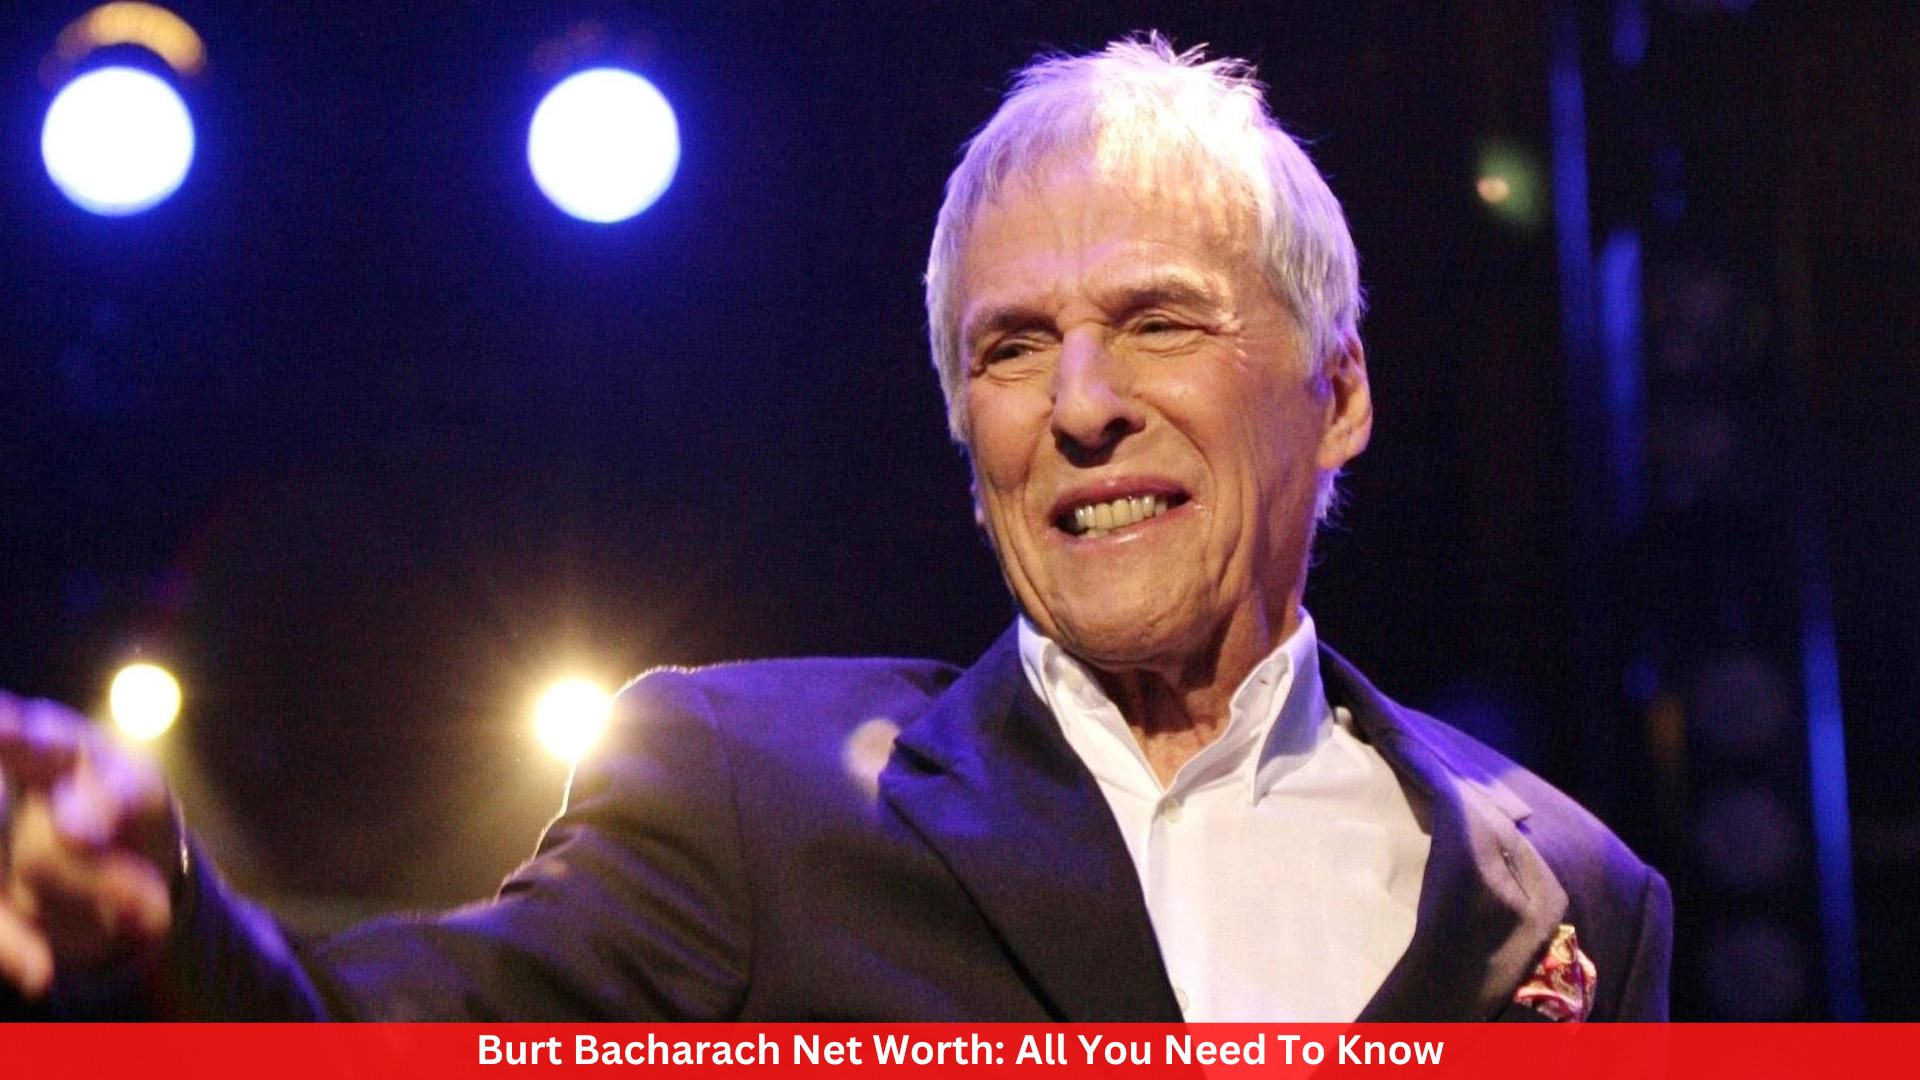 Burt Bacharach Net Worth: All You Need To Know